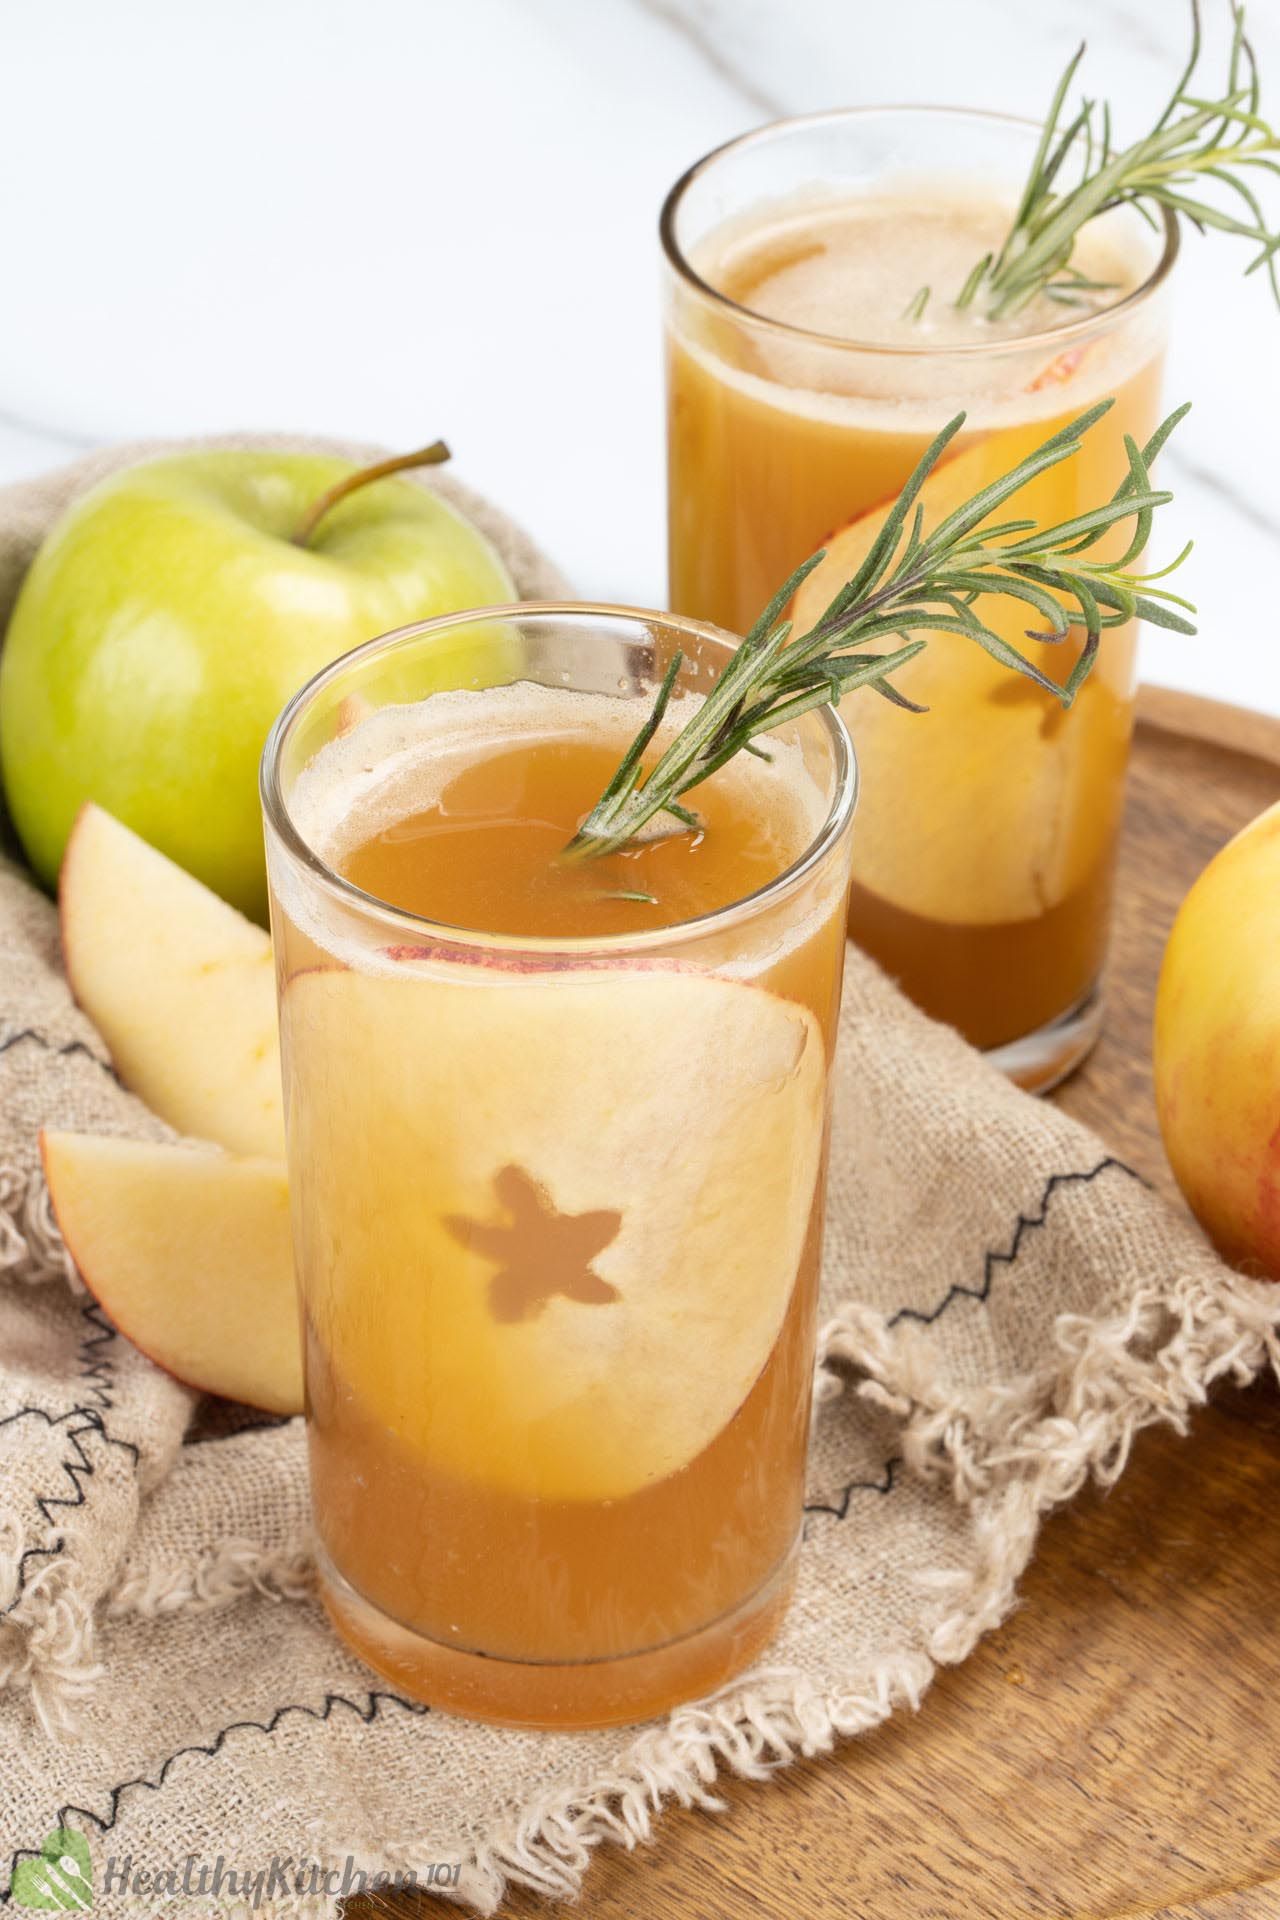 homemade sugar-free apple juice